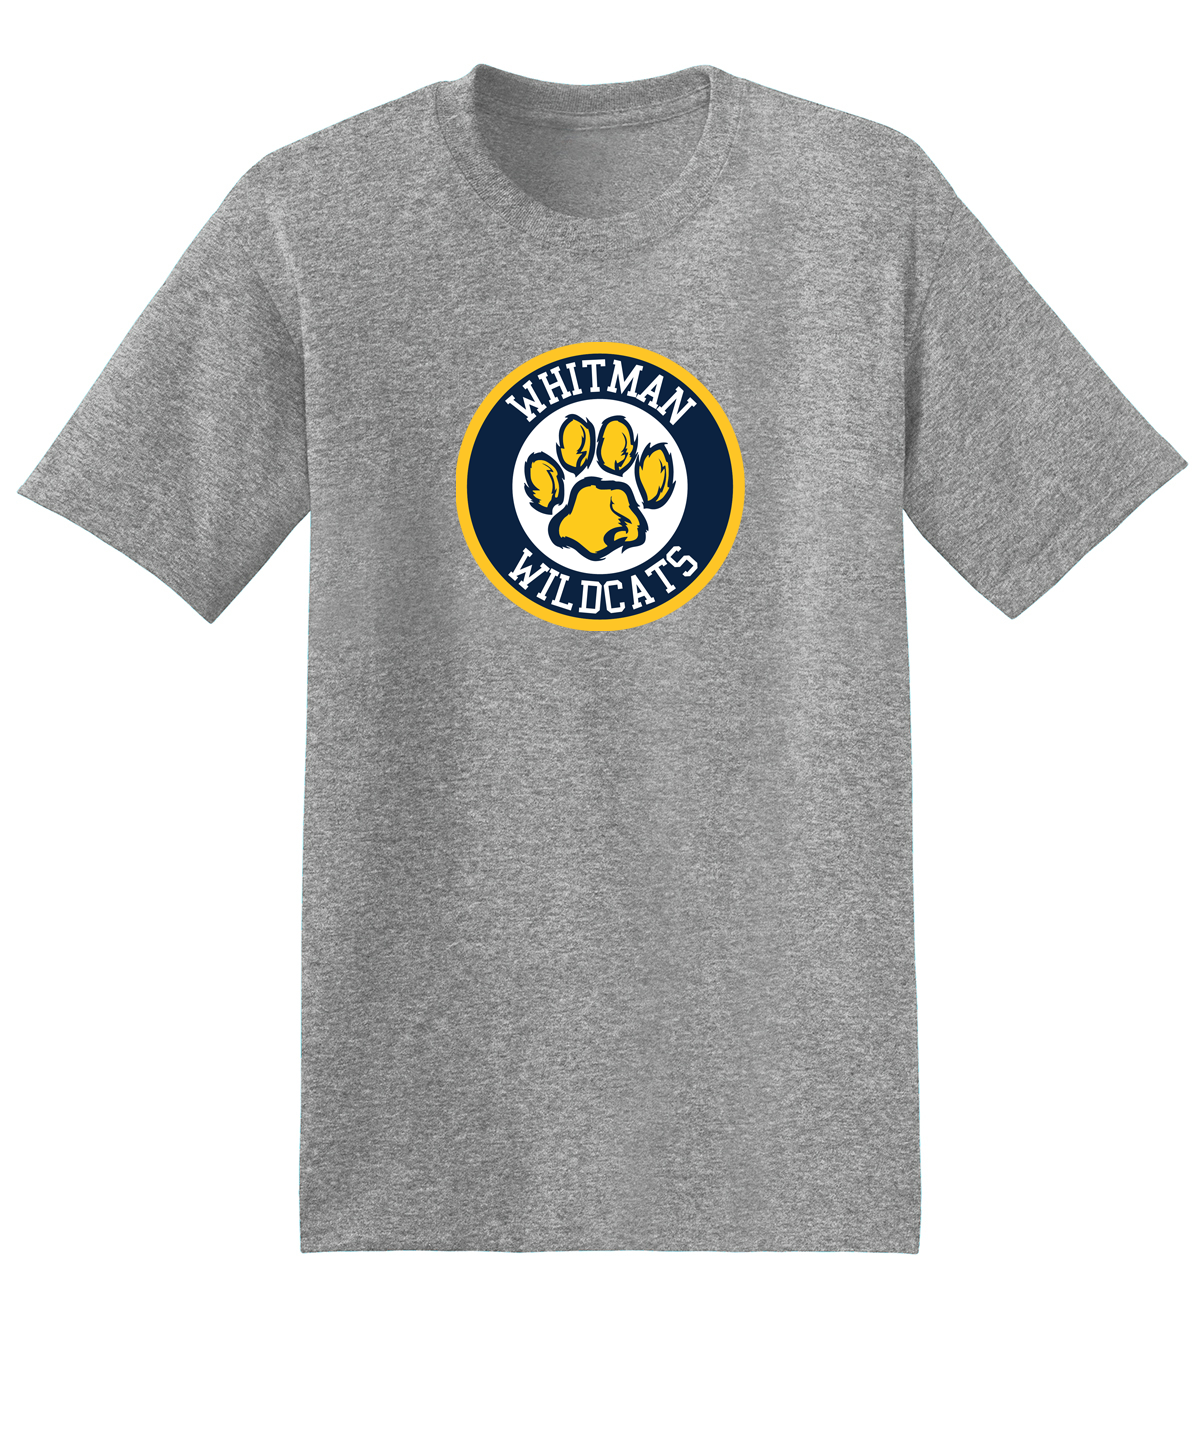 Whitman Wildcats T-Shirt